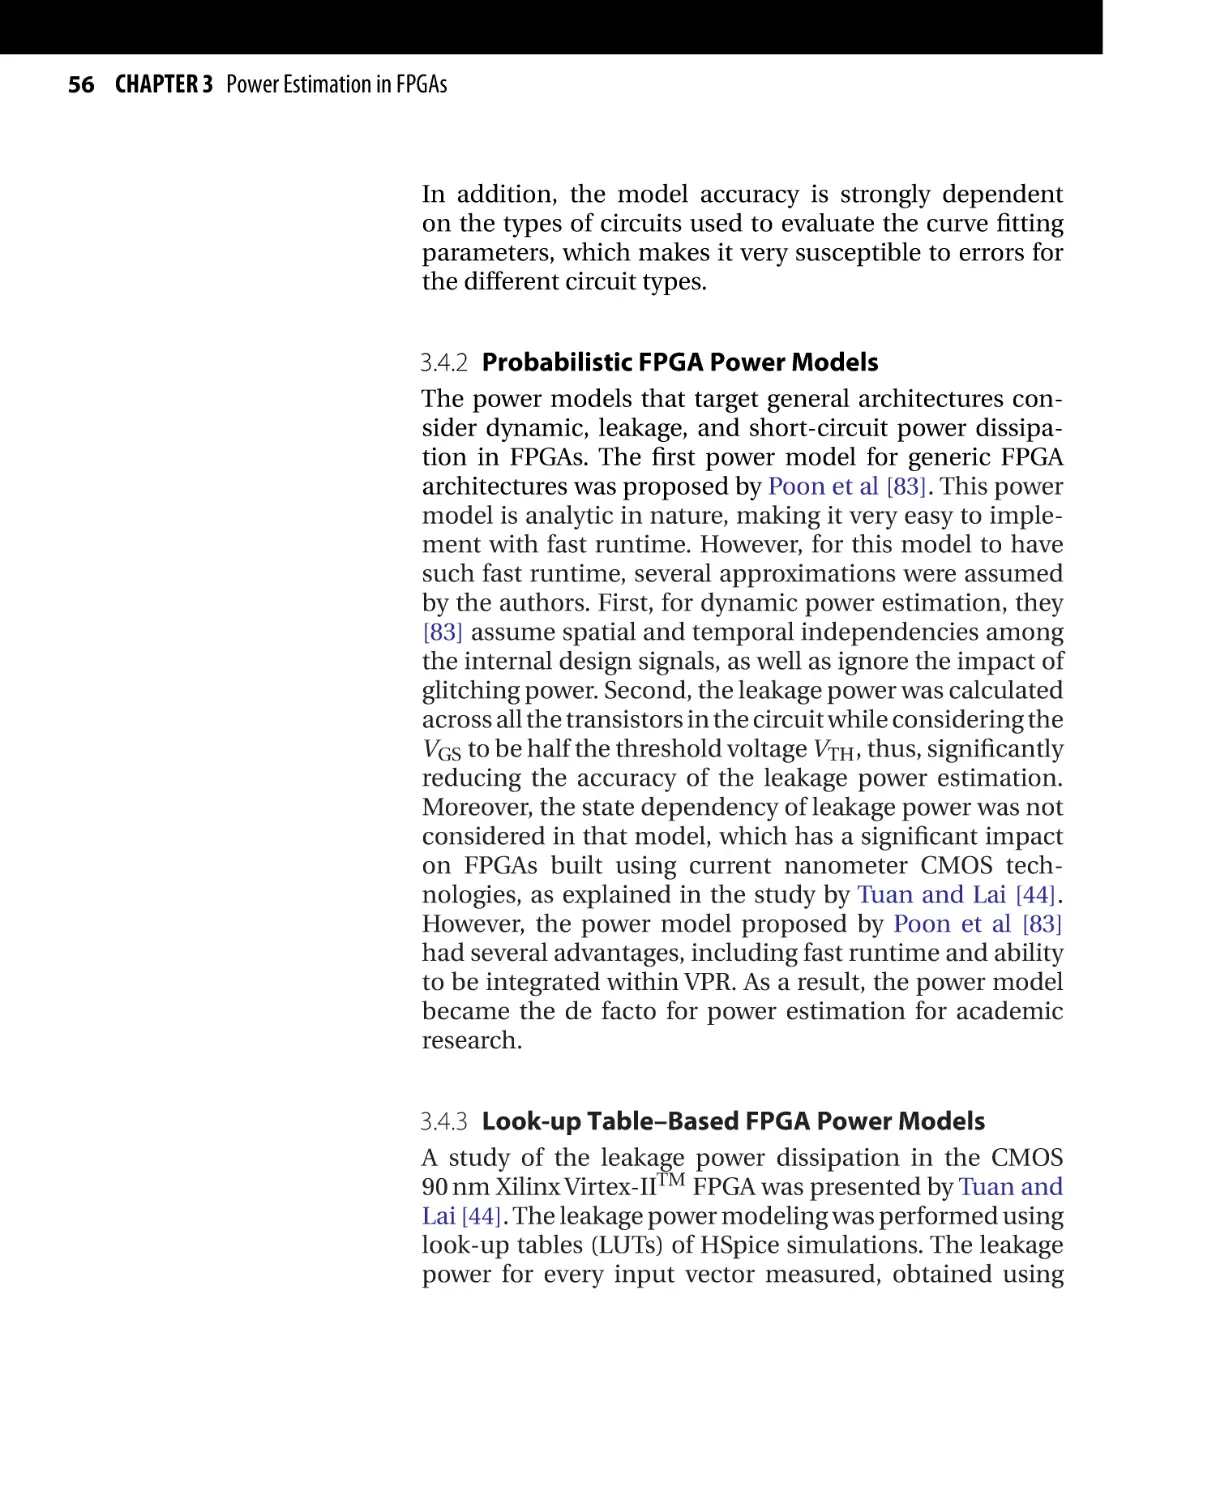 Probabilistic FPGA Power Models
Look-up Table--Based FPGA Power Models